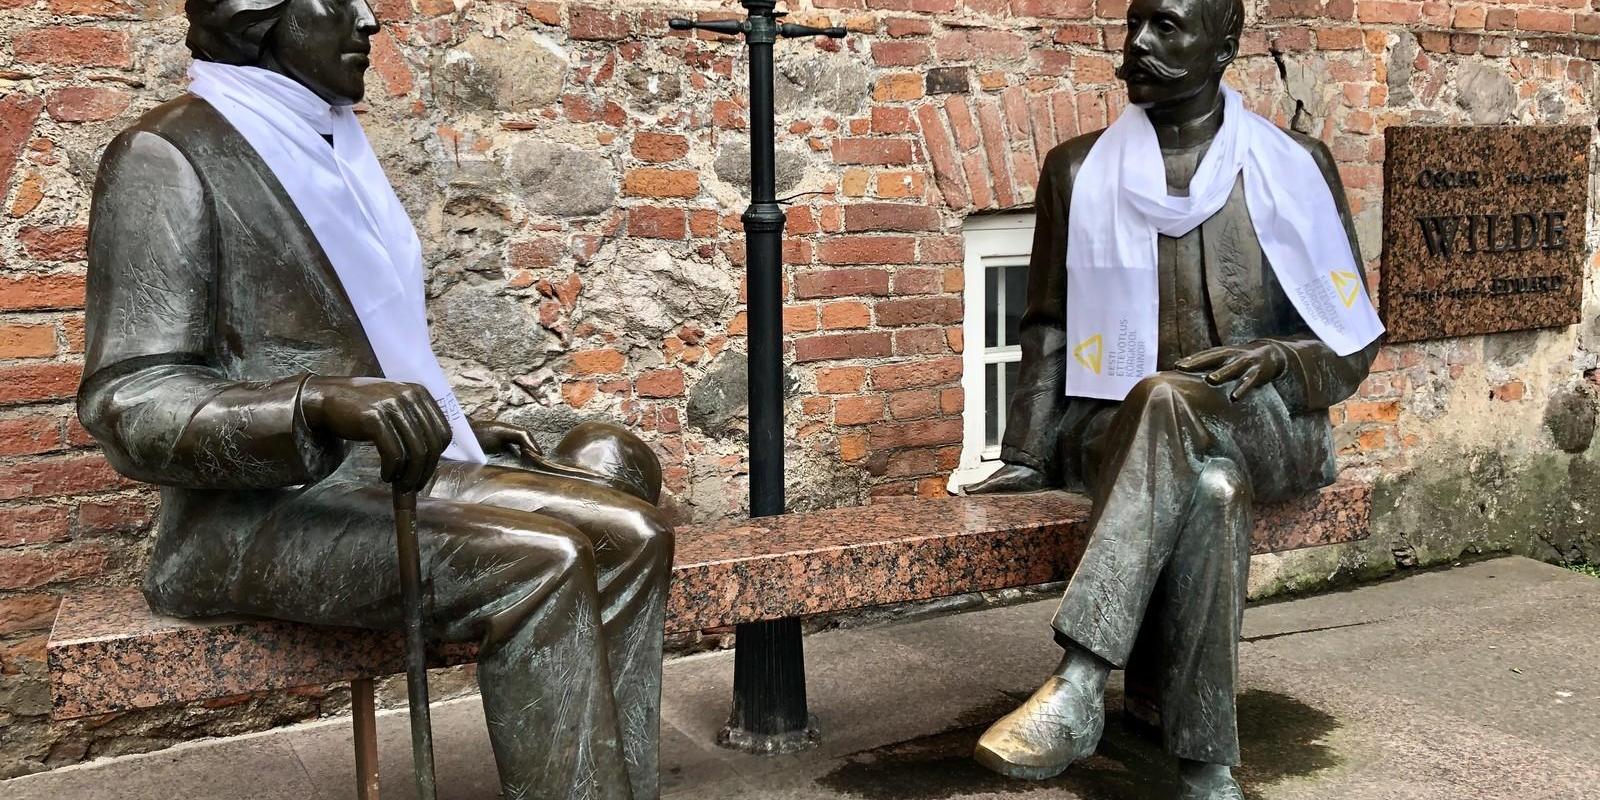 Two men, Eduard Vilde and Oscar Wilde, talking on a stone bench